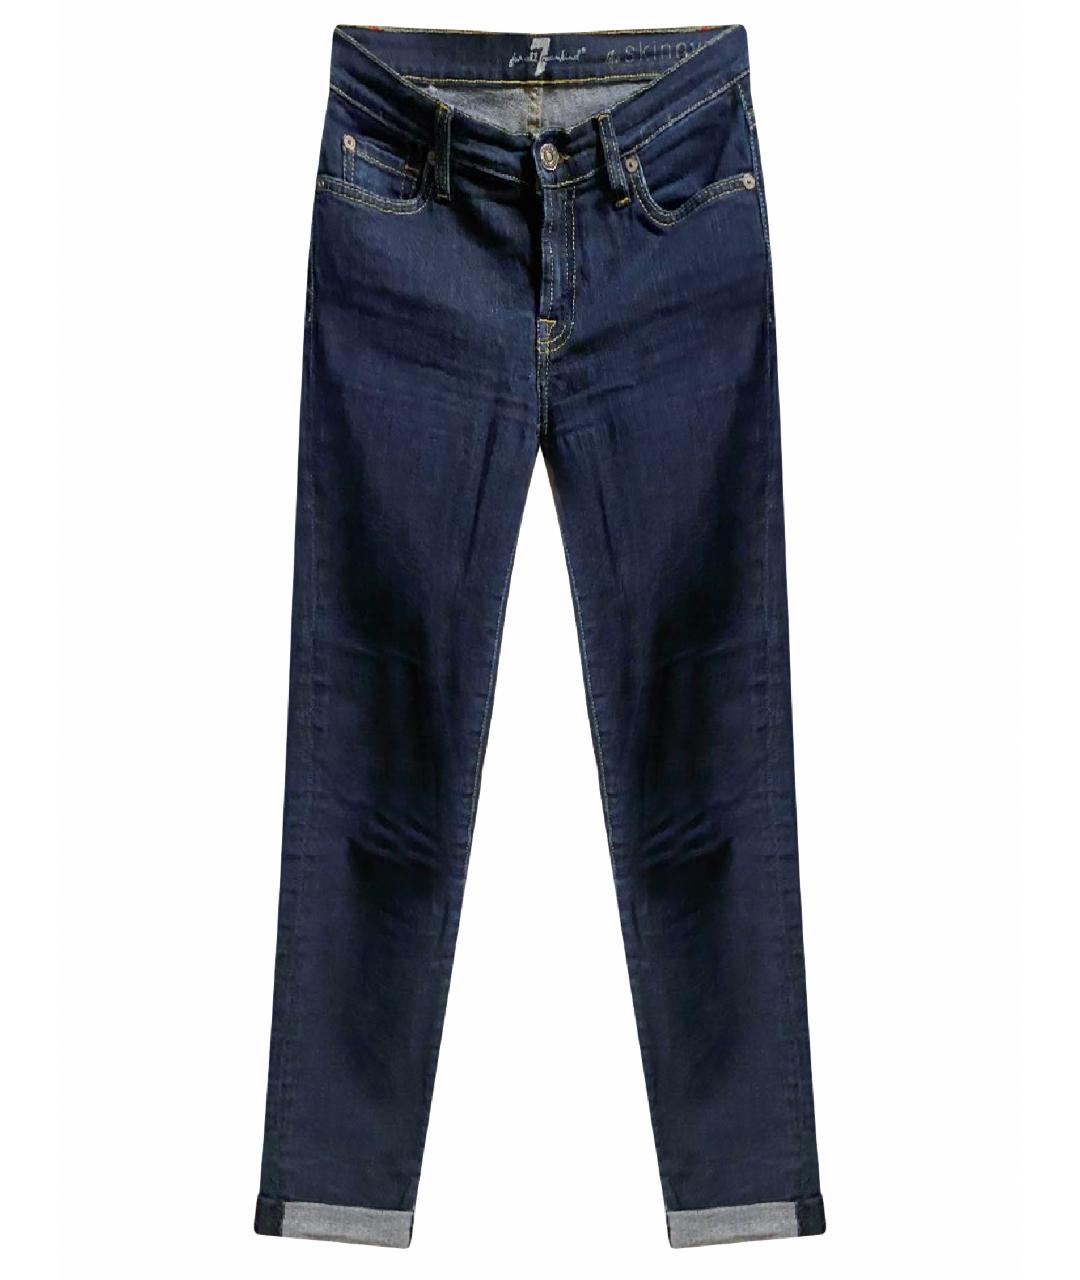 7 FOR ALL MANKIND Темно-синие хлопковые джинсы слим, фото 1